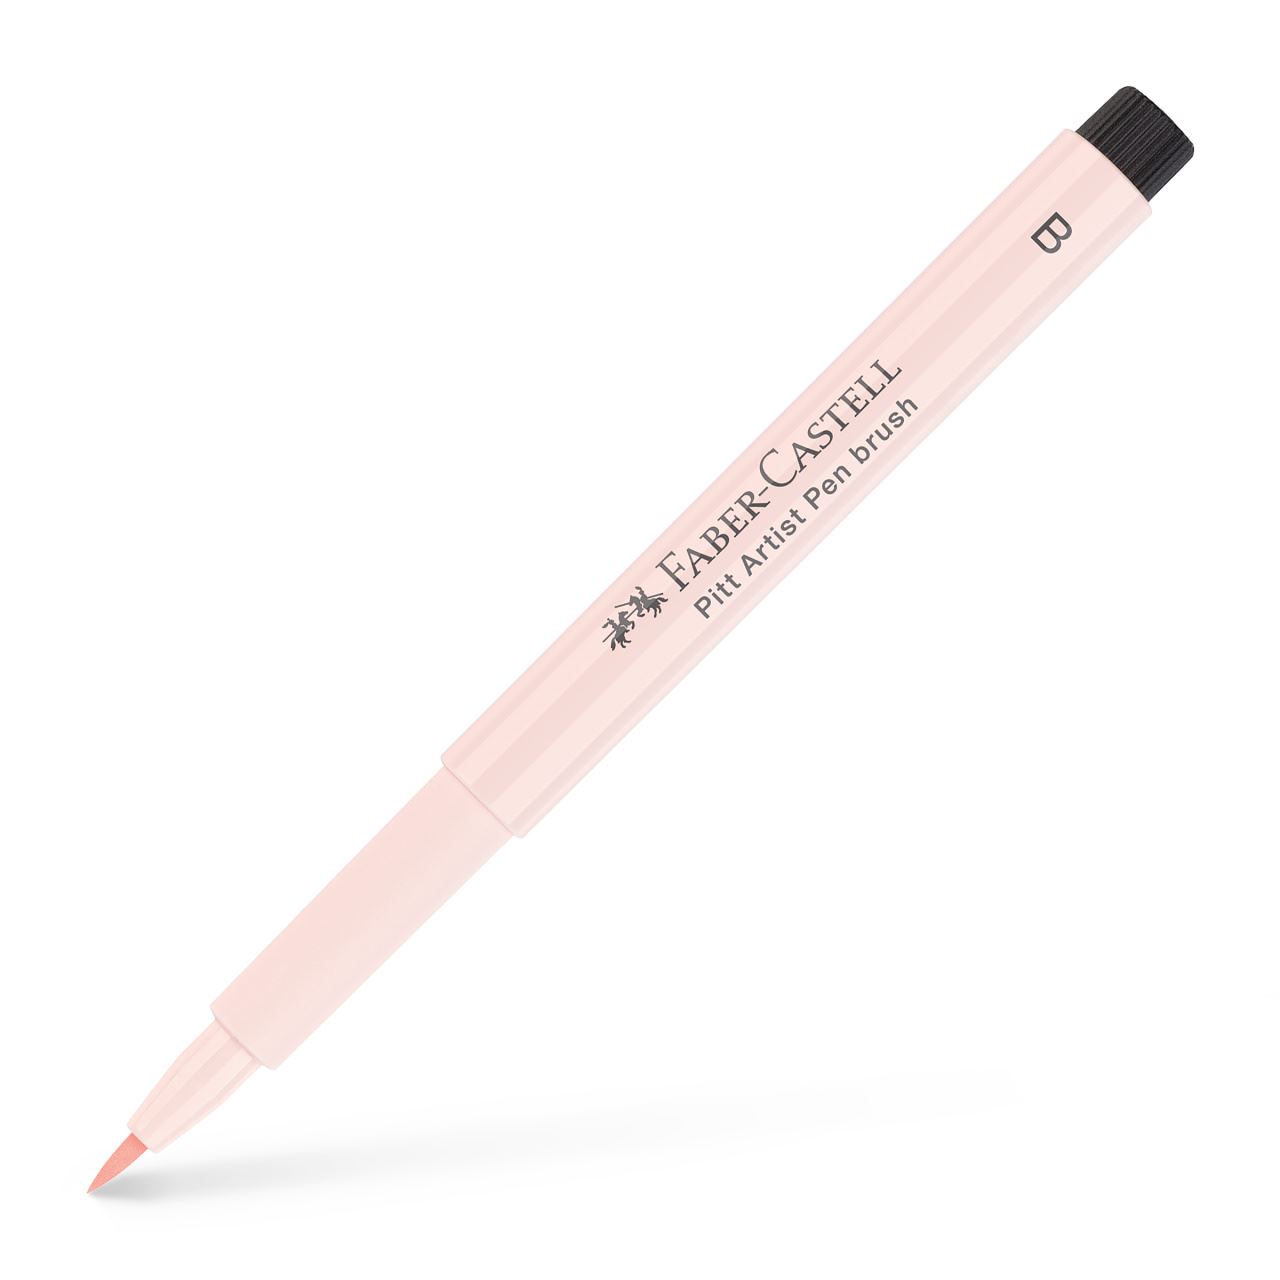 Faber-Castell - Pitt Artist Pen Brush India ink pen, pale pink